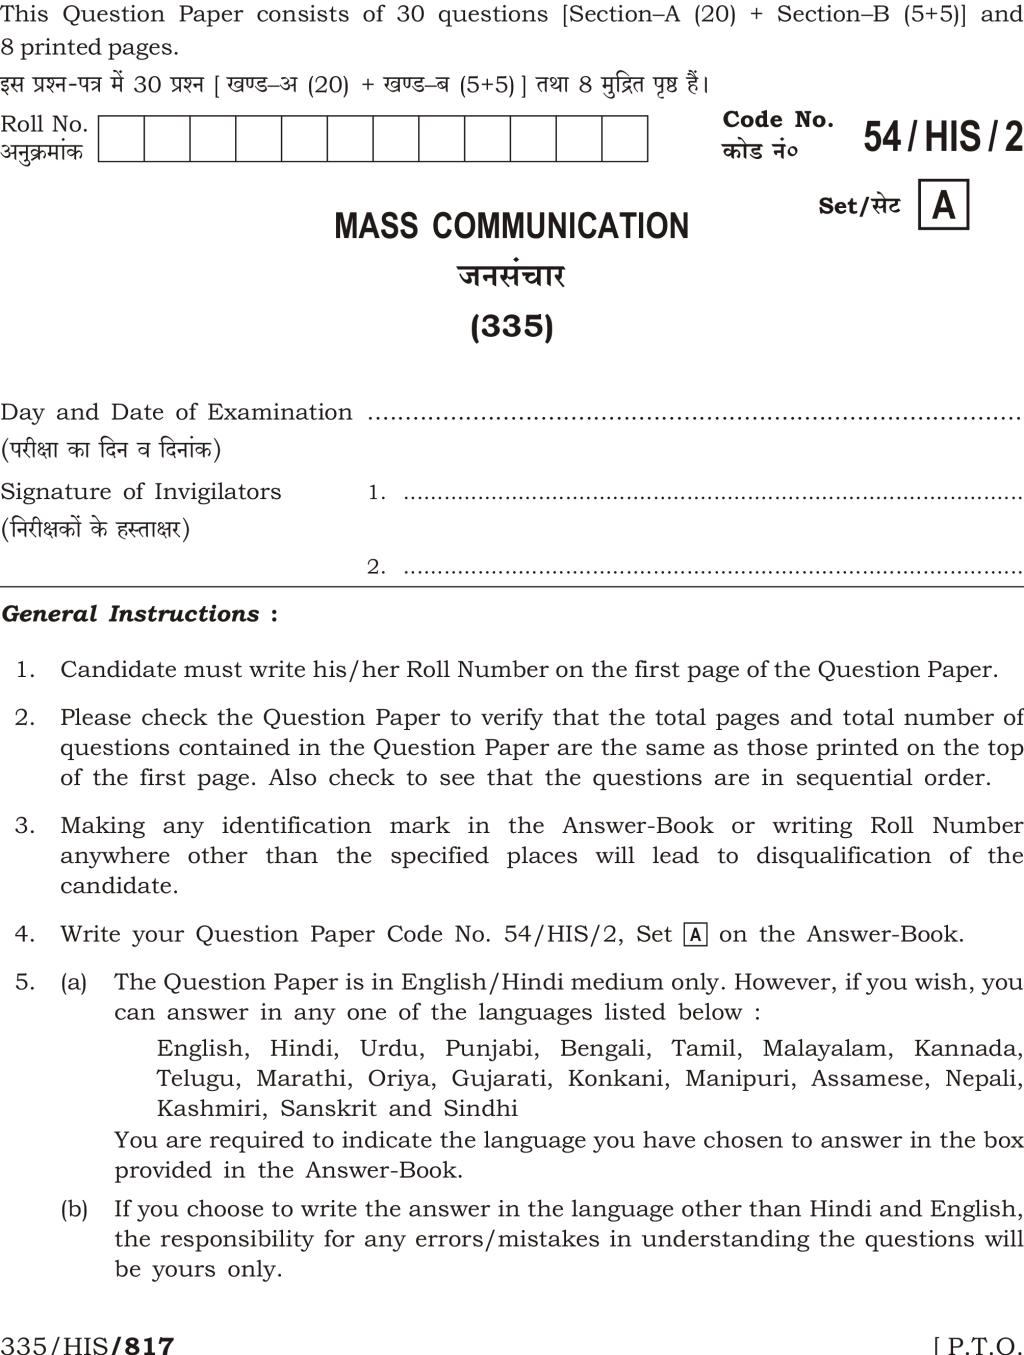 NIOS Class 12 Question Paper Apr 2017 - Mass Communication - Page 1